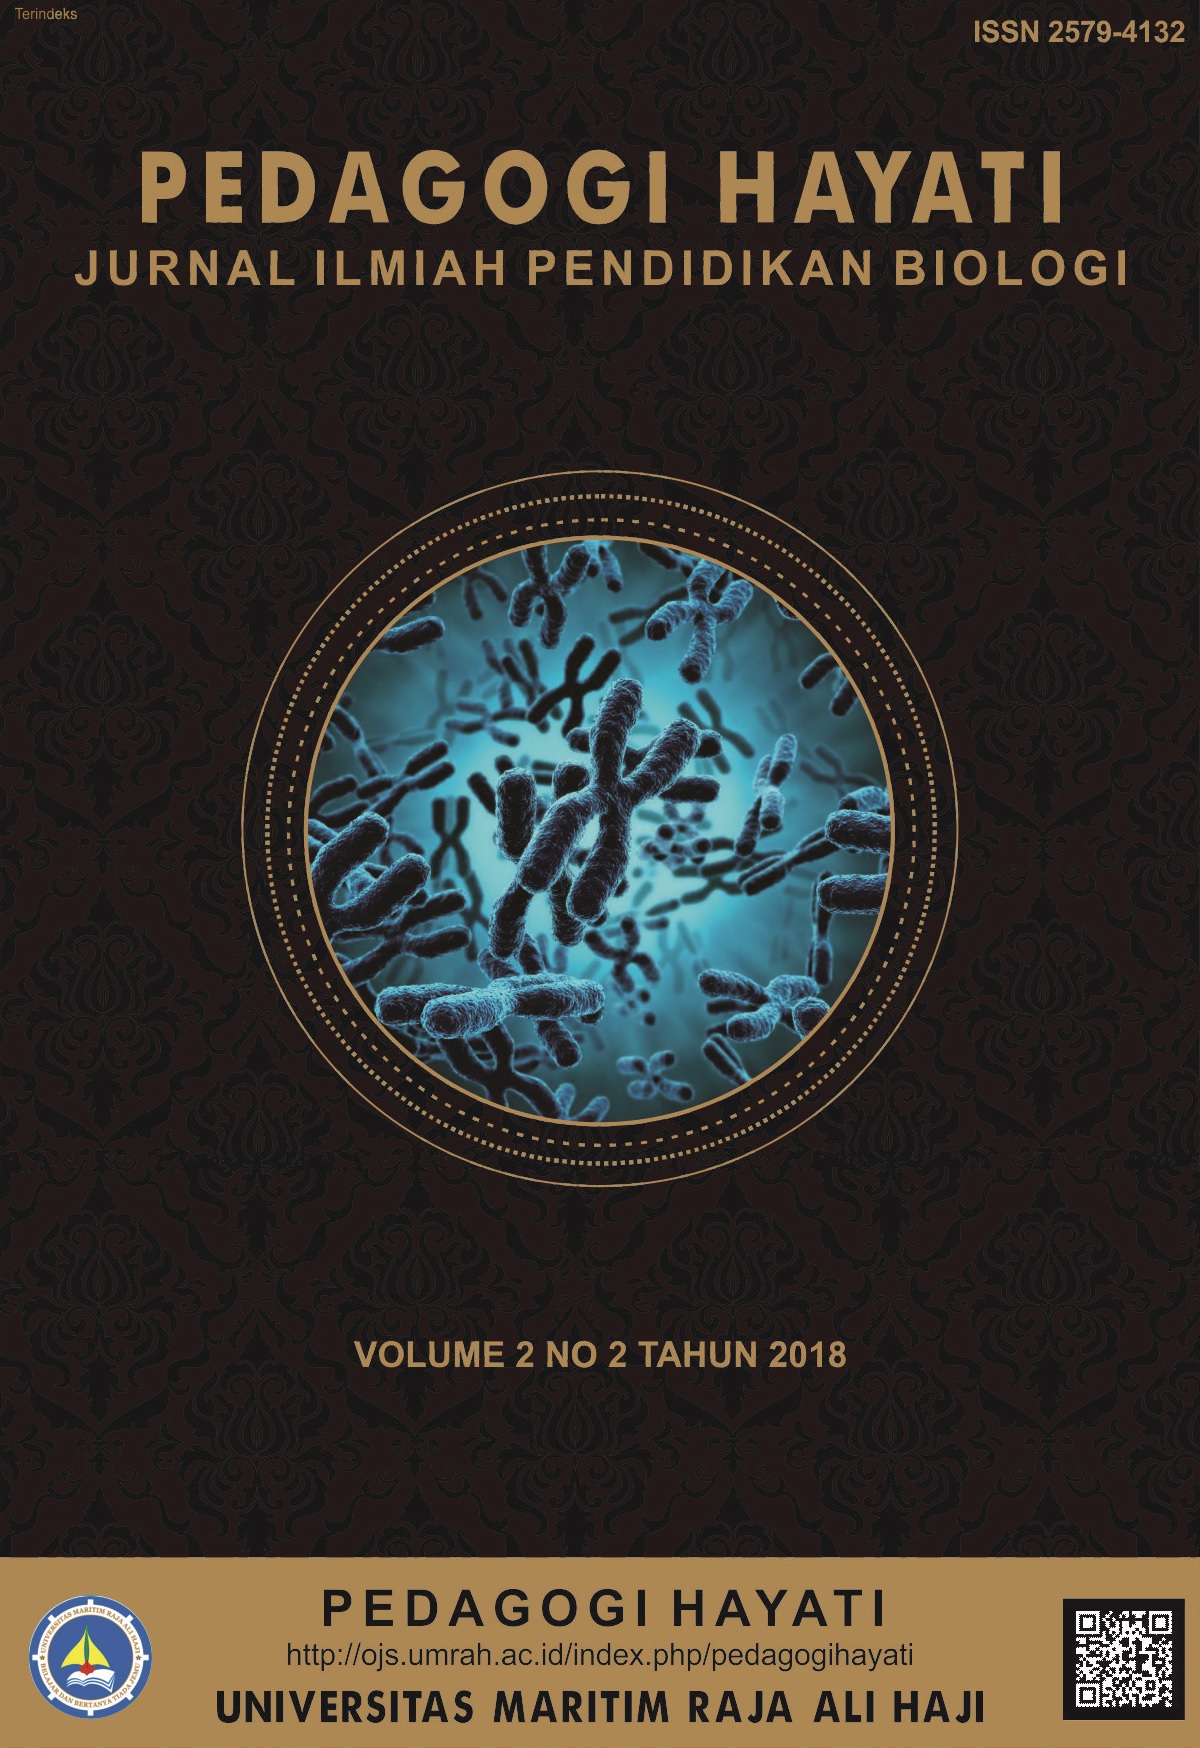 Pedagogi Hayati jurnal pendidikan biologi penelitian terbaru